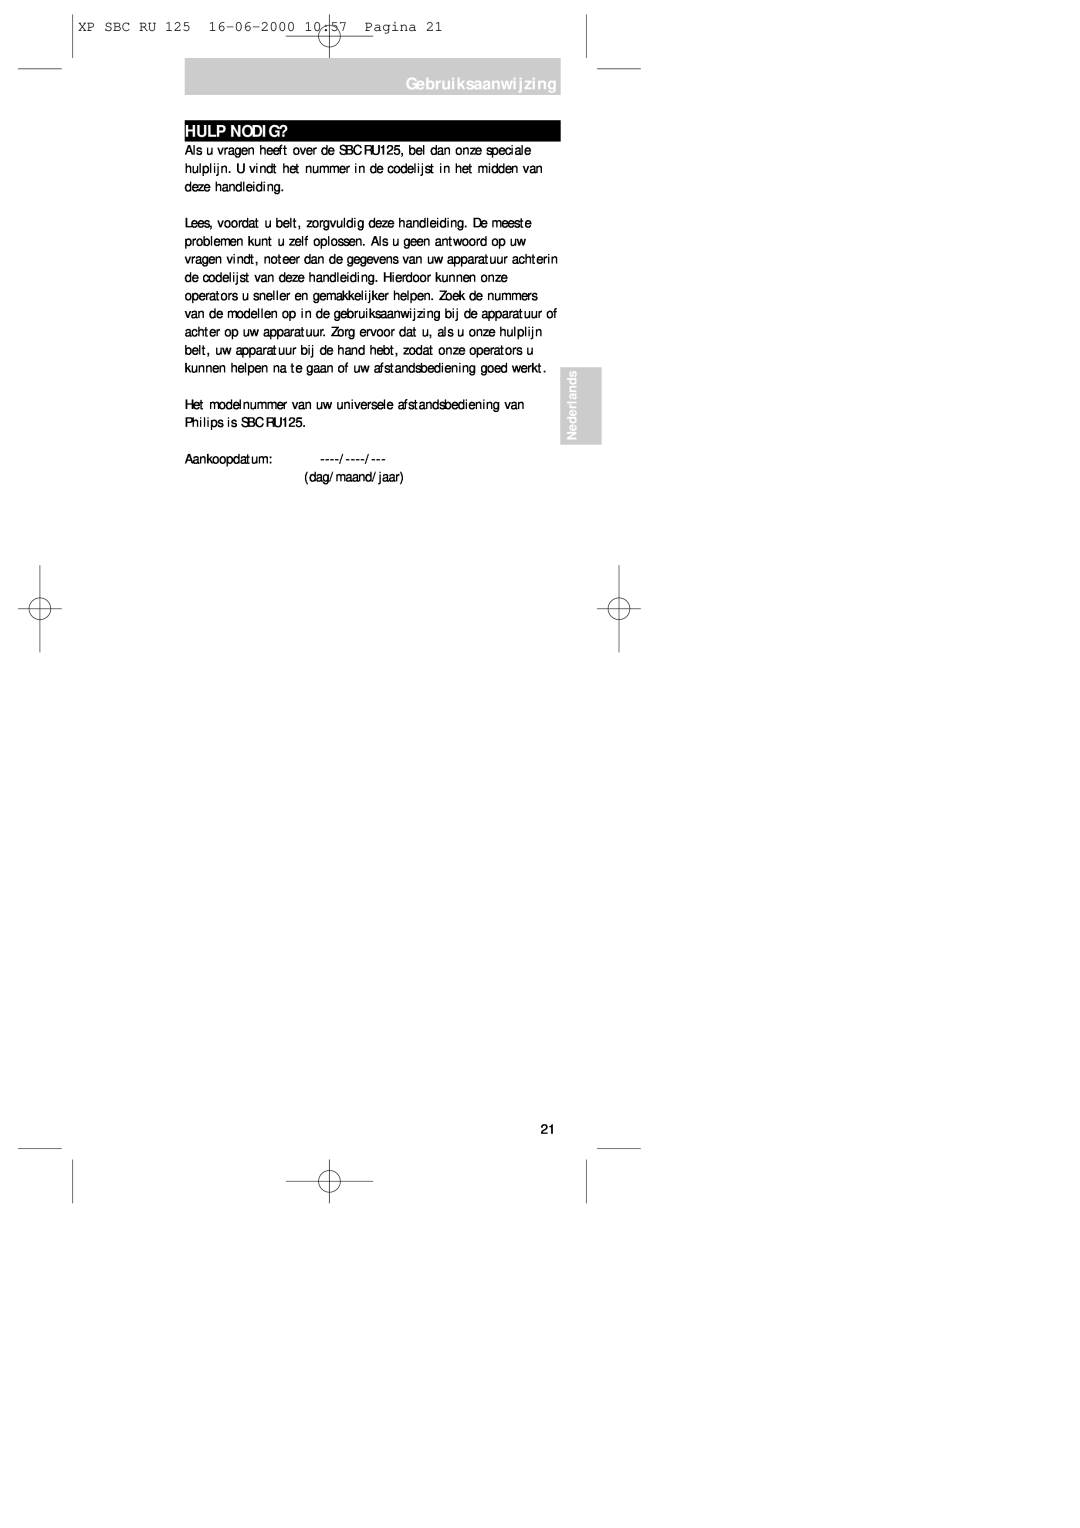 Philips RU125 manual Hulp Nodig?, Gebruiksaanwijzing, XP SBC RU 125 16-06-200010 57 Pagina, Nederlands 